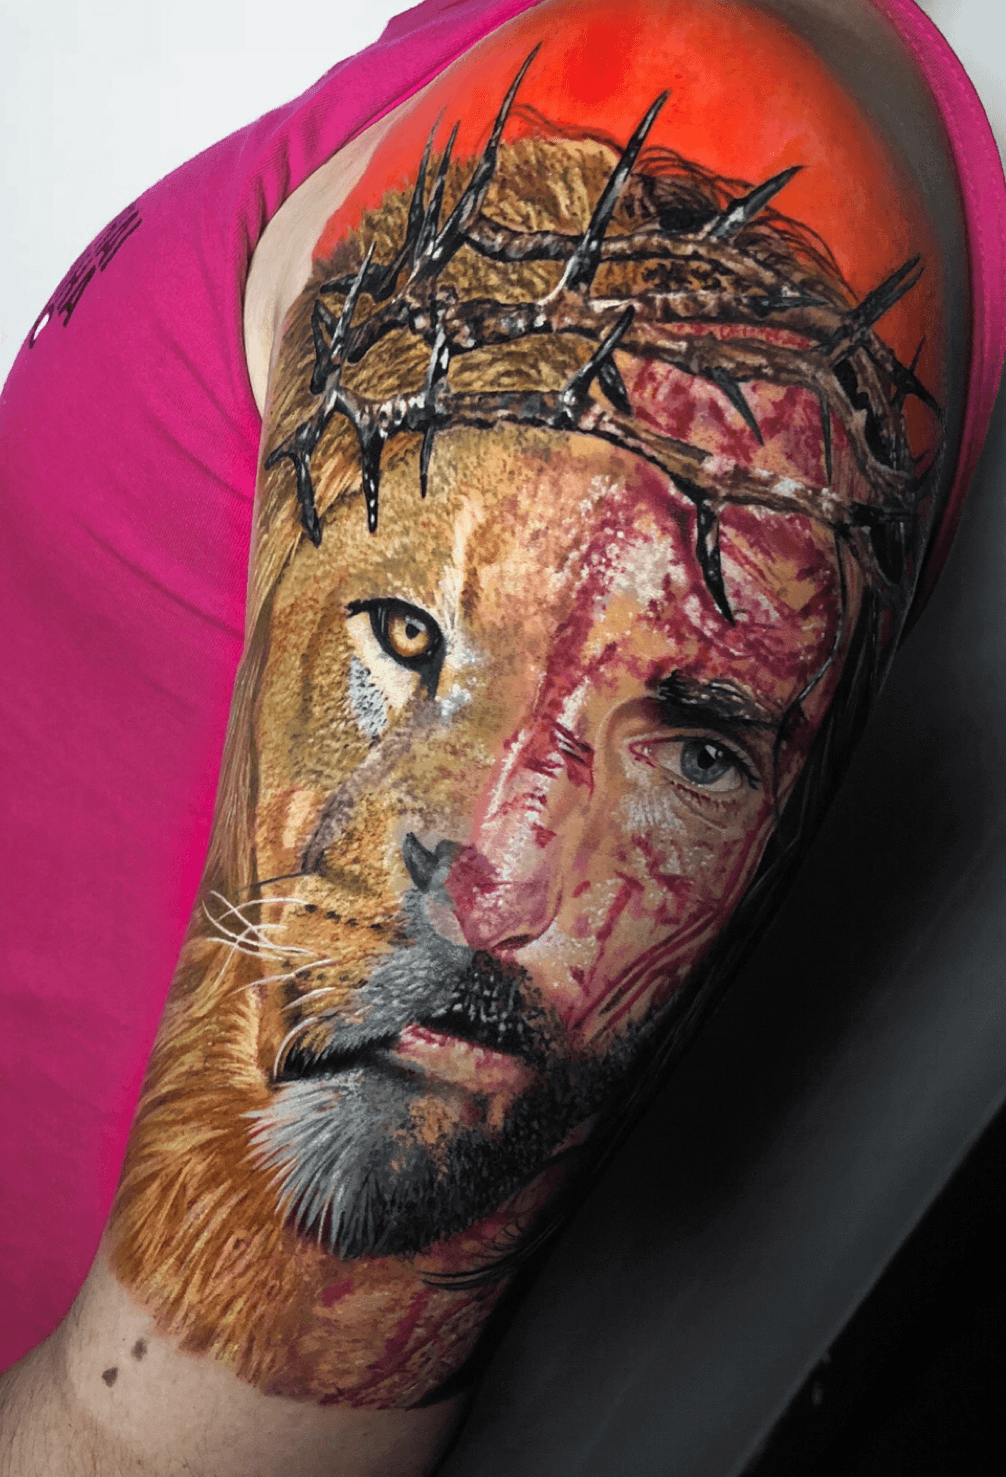 12 Christian Half Sleeve Tattoo Ideas To Inspire You  alexie